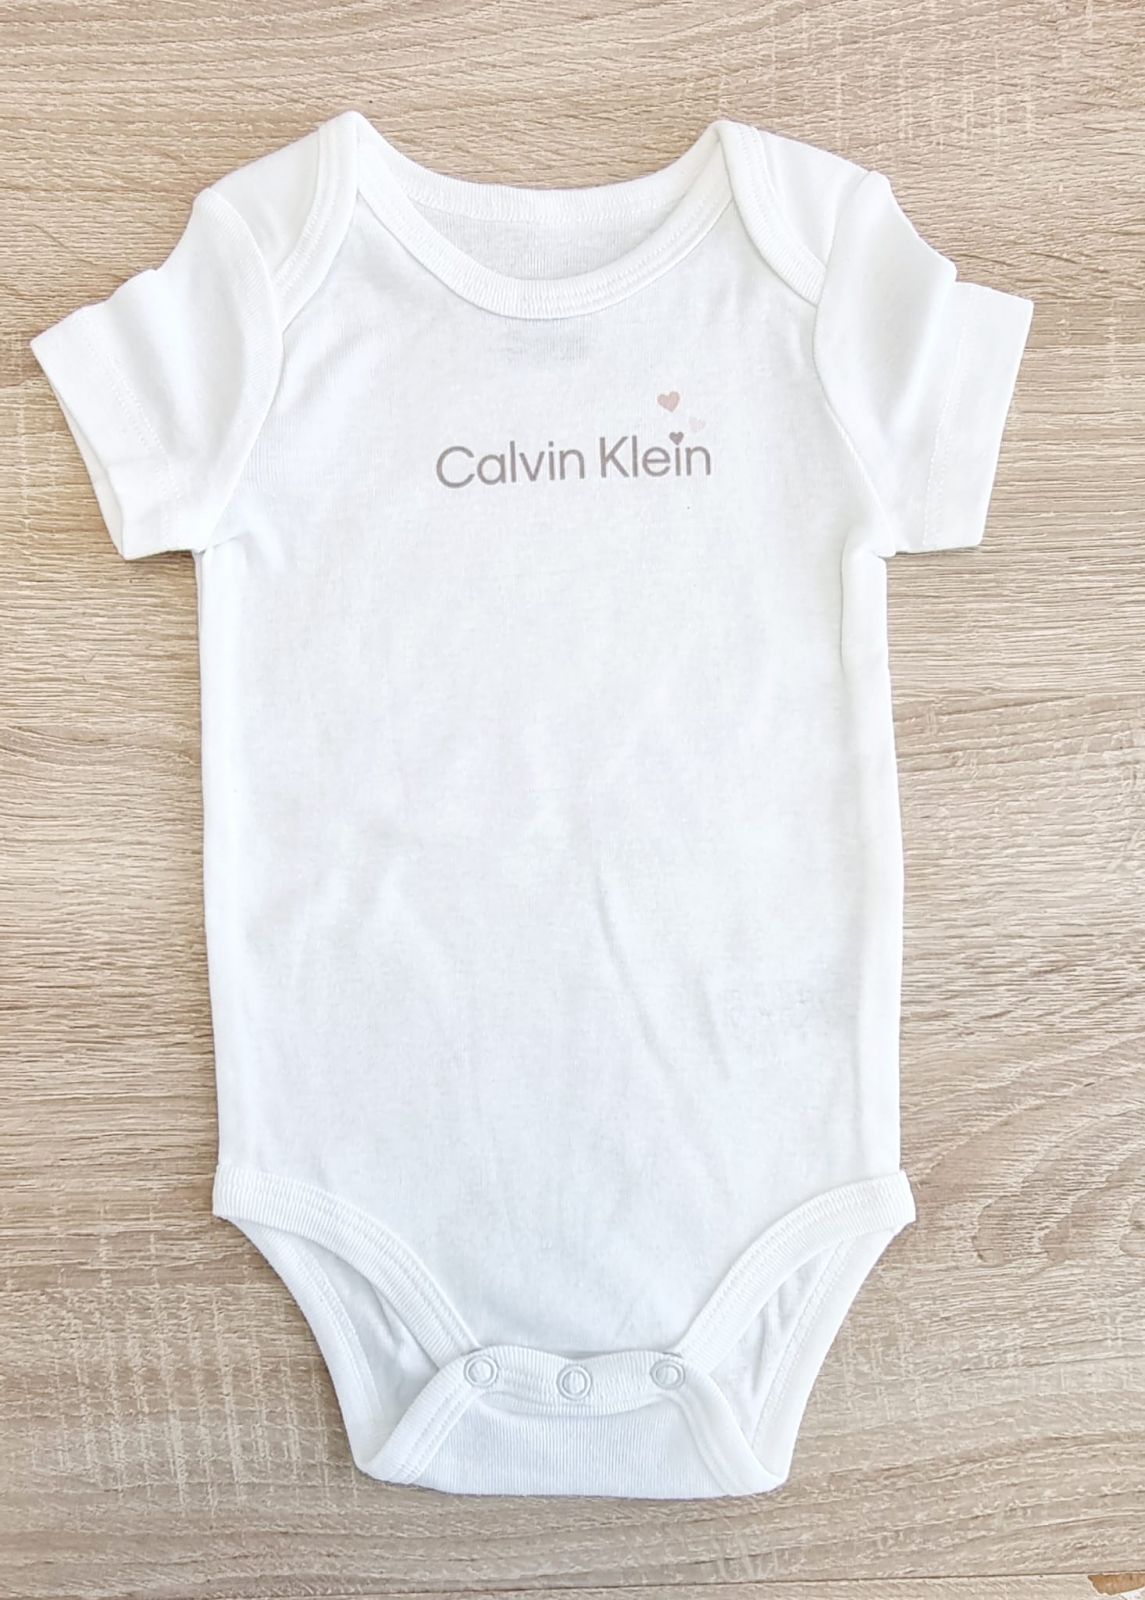 Calvin Klein bodýčko pro miminko, holčičku